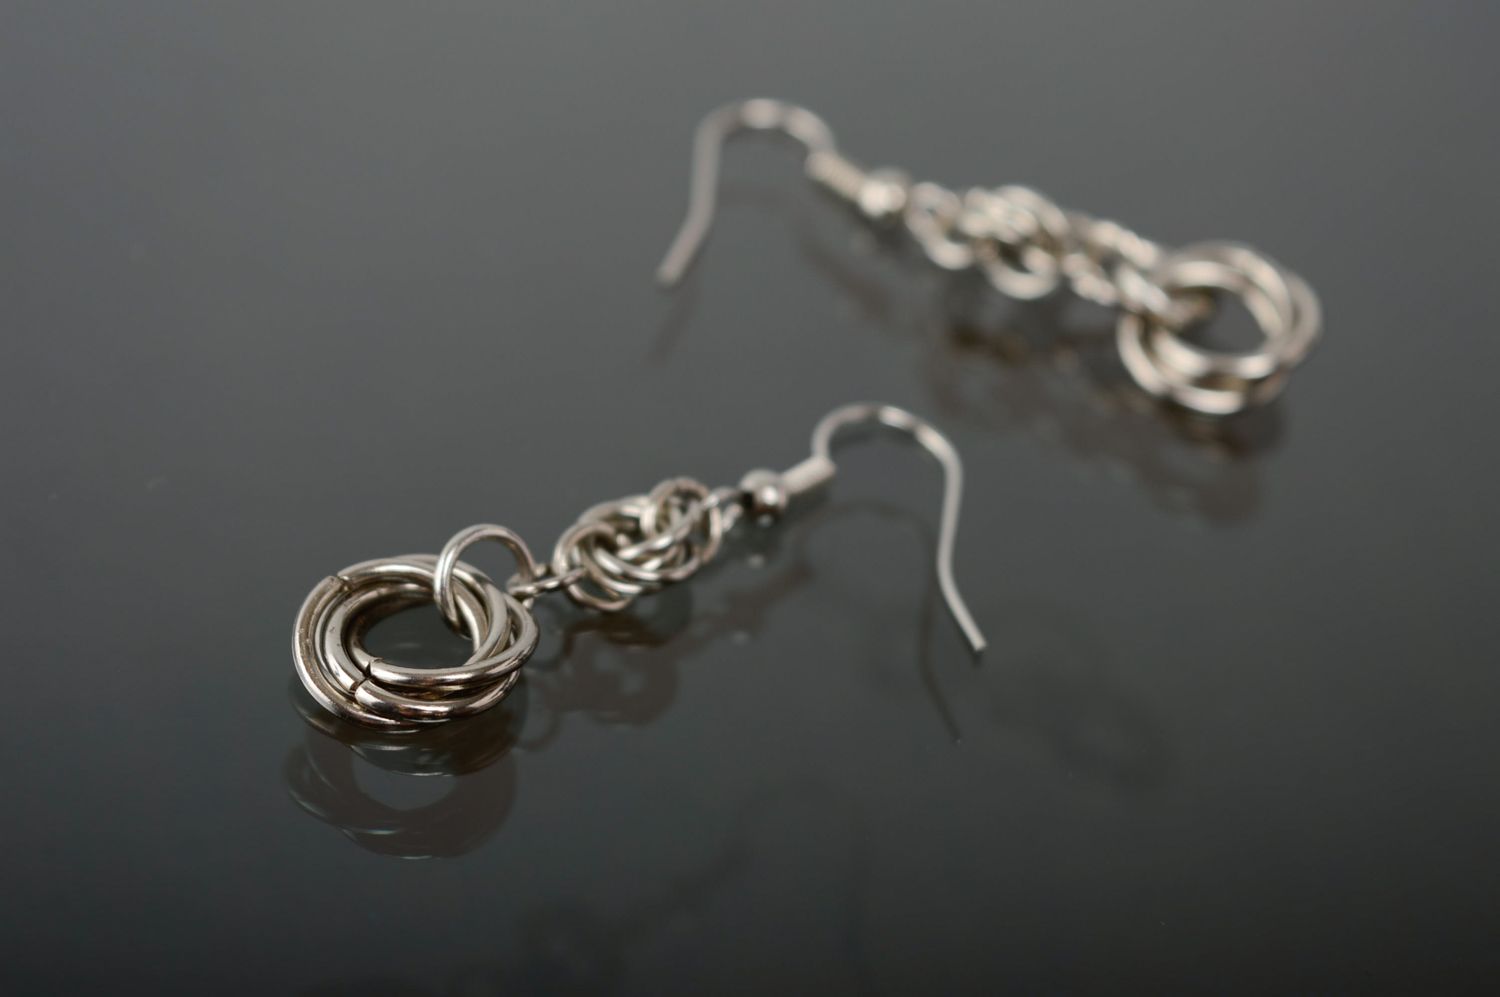 Handmade metal earrings created using chain armor weaving technique photo 5